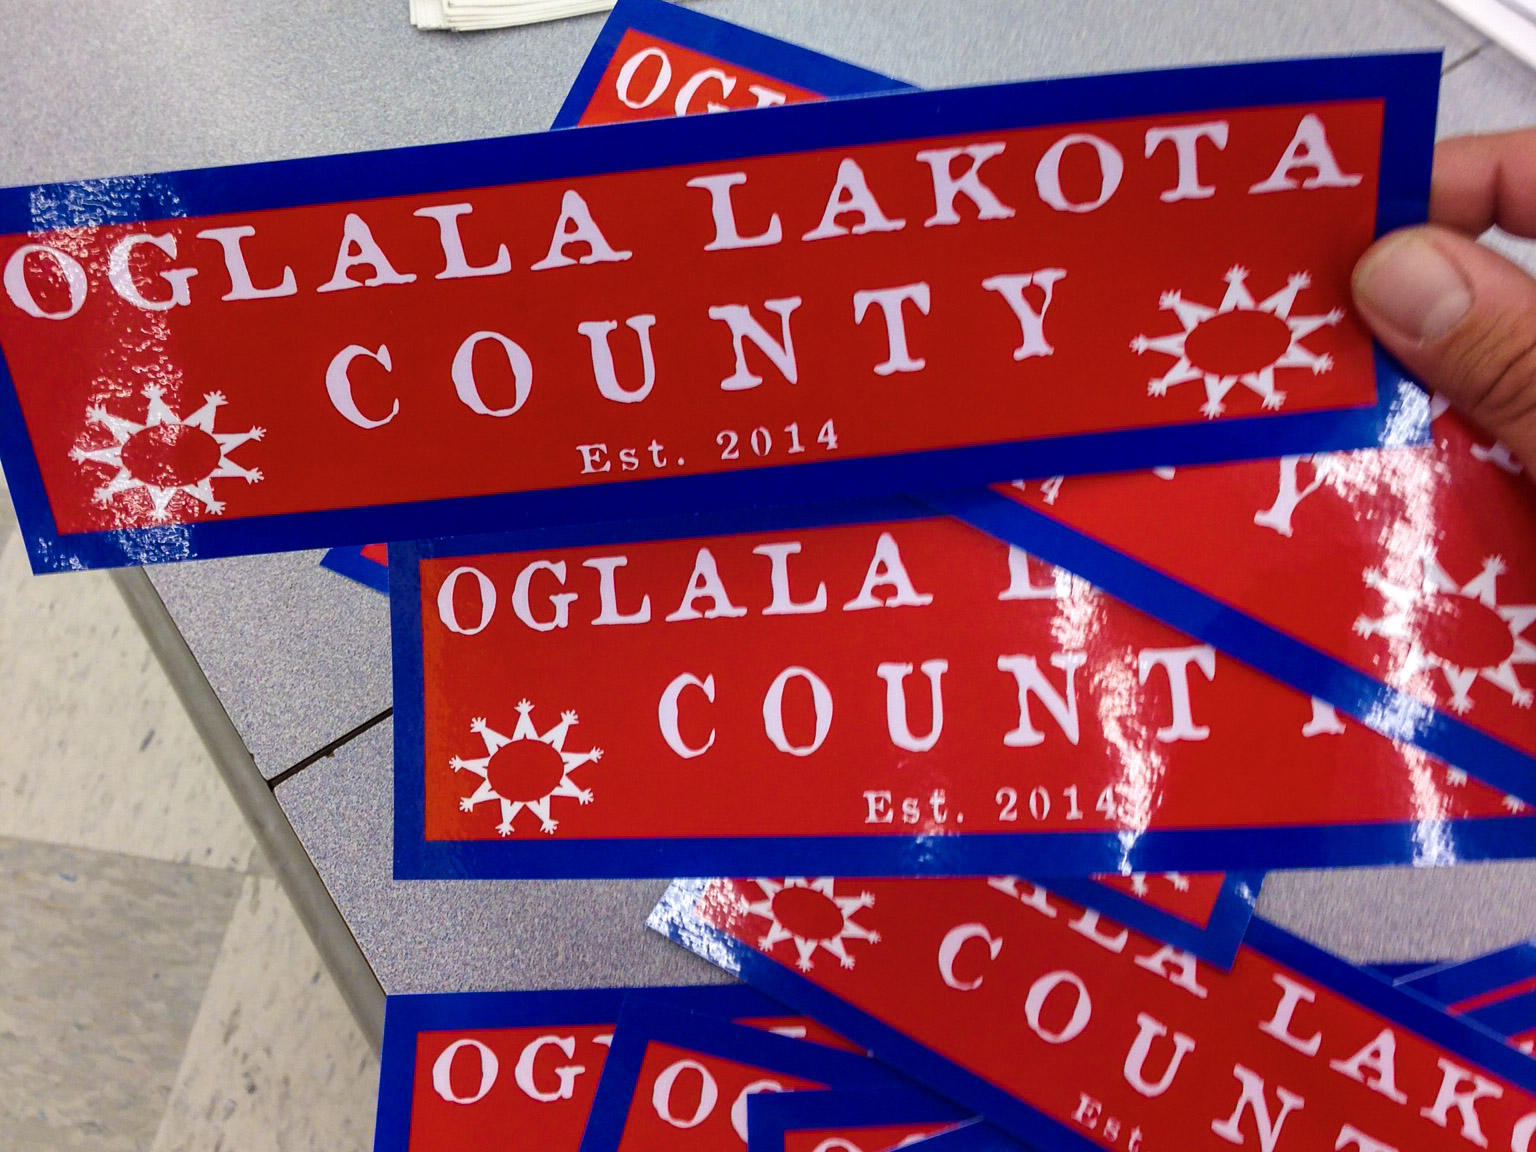 Oglala Lakota County